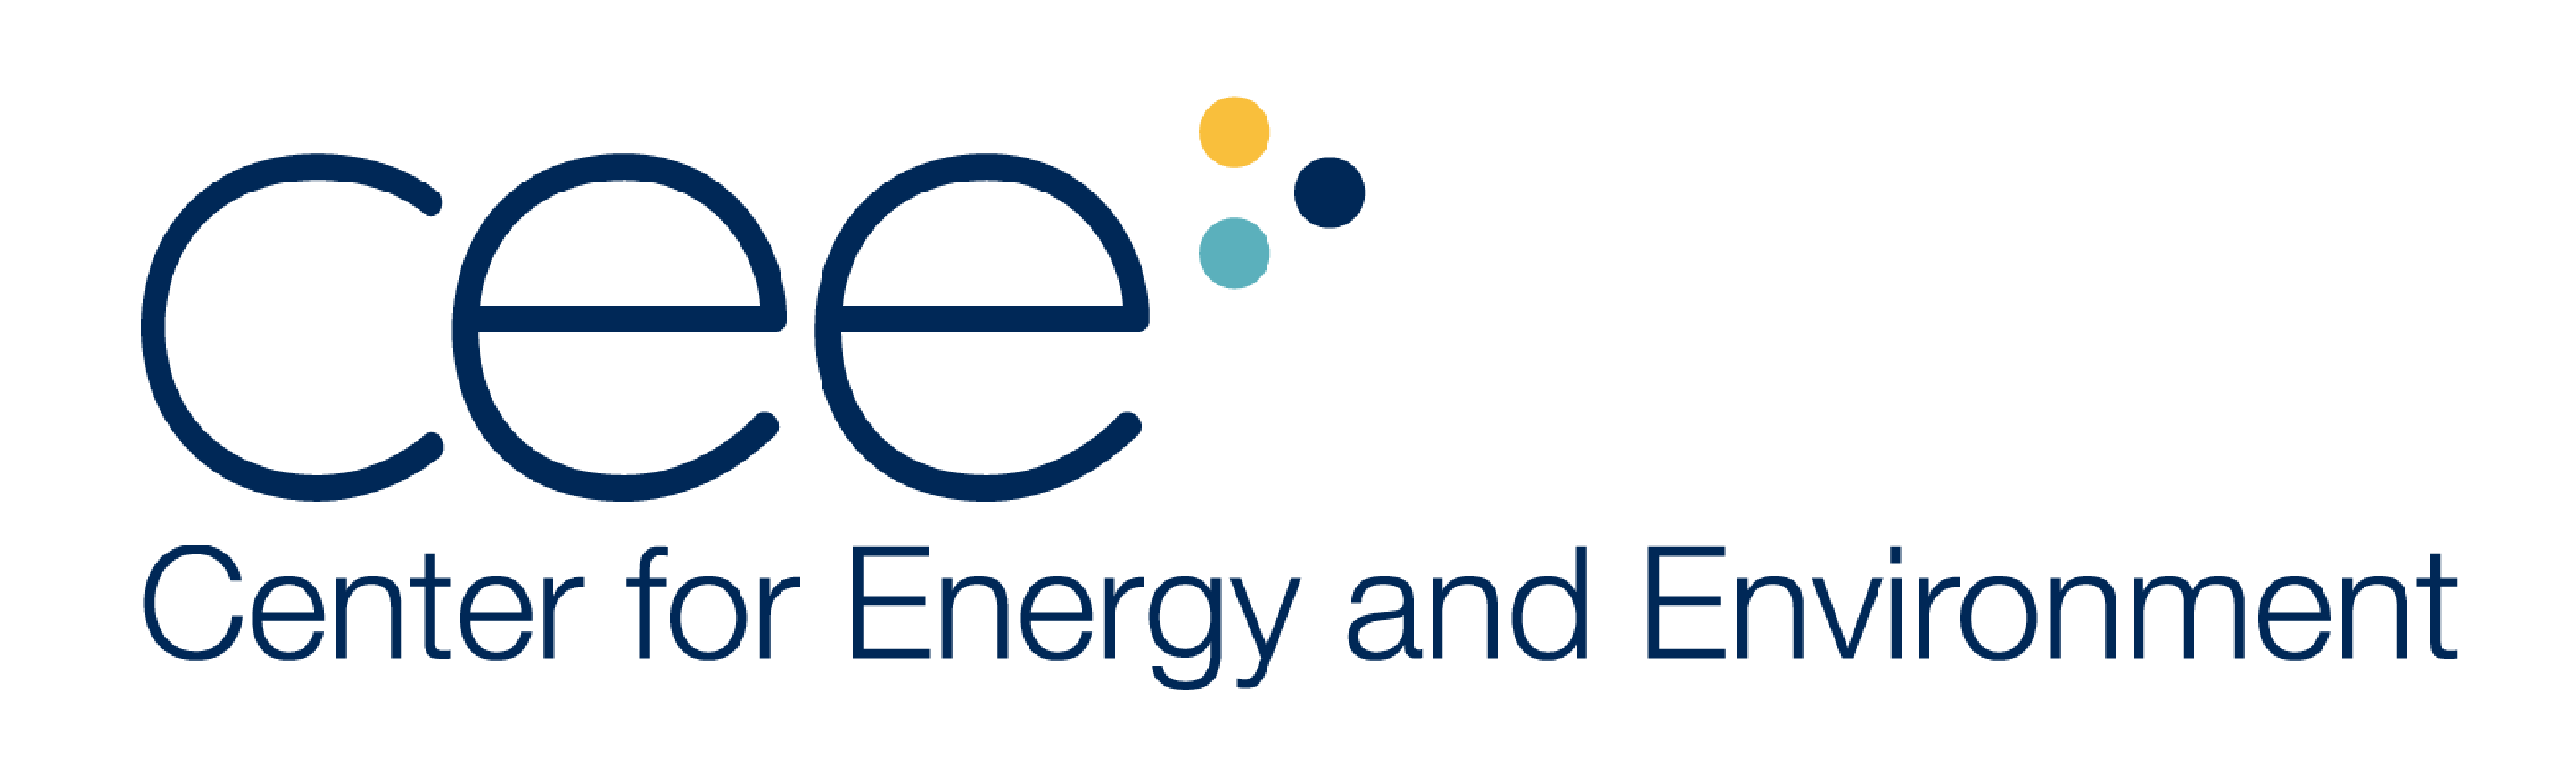 CEE logo